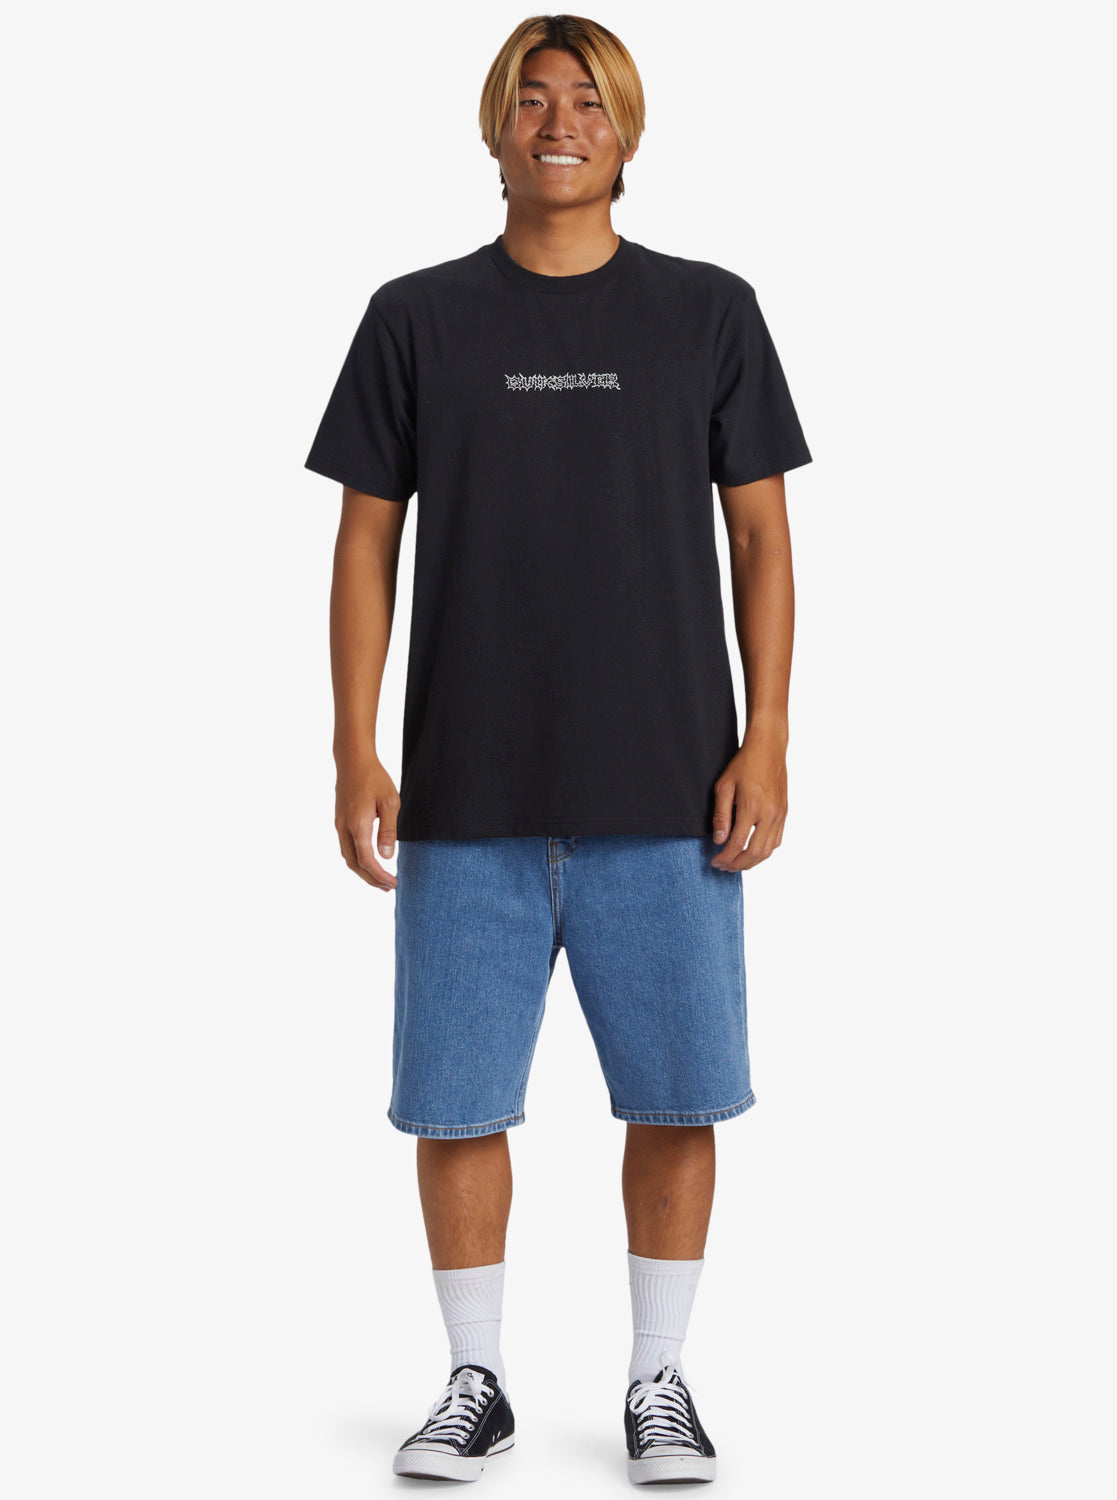 Razor Short Sleeve Saturn T-Shirt - Black